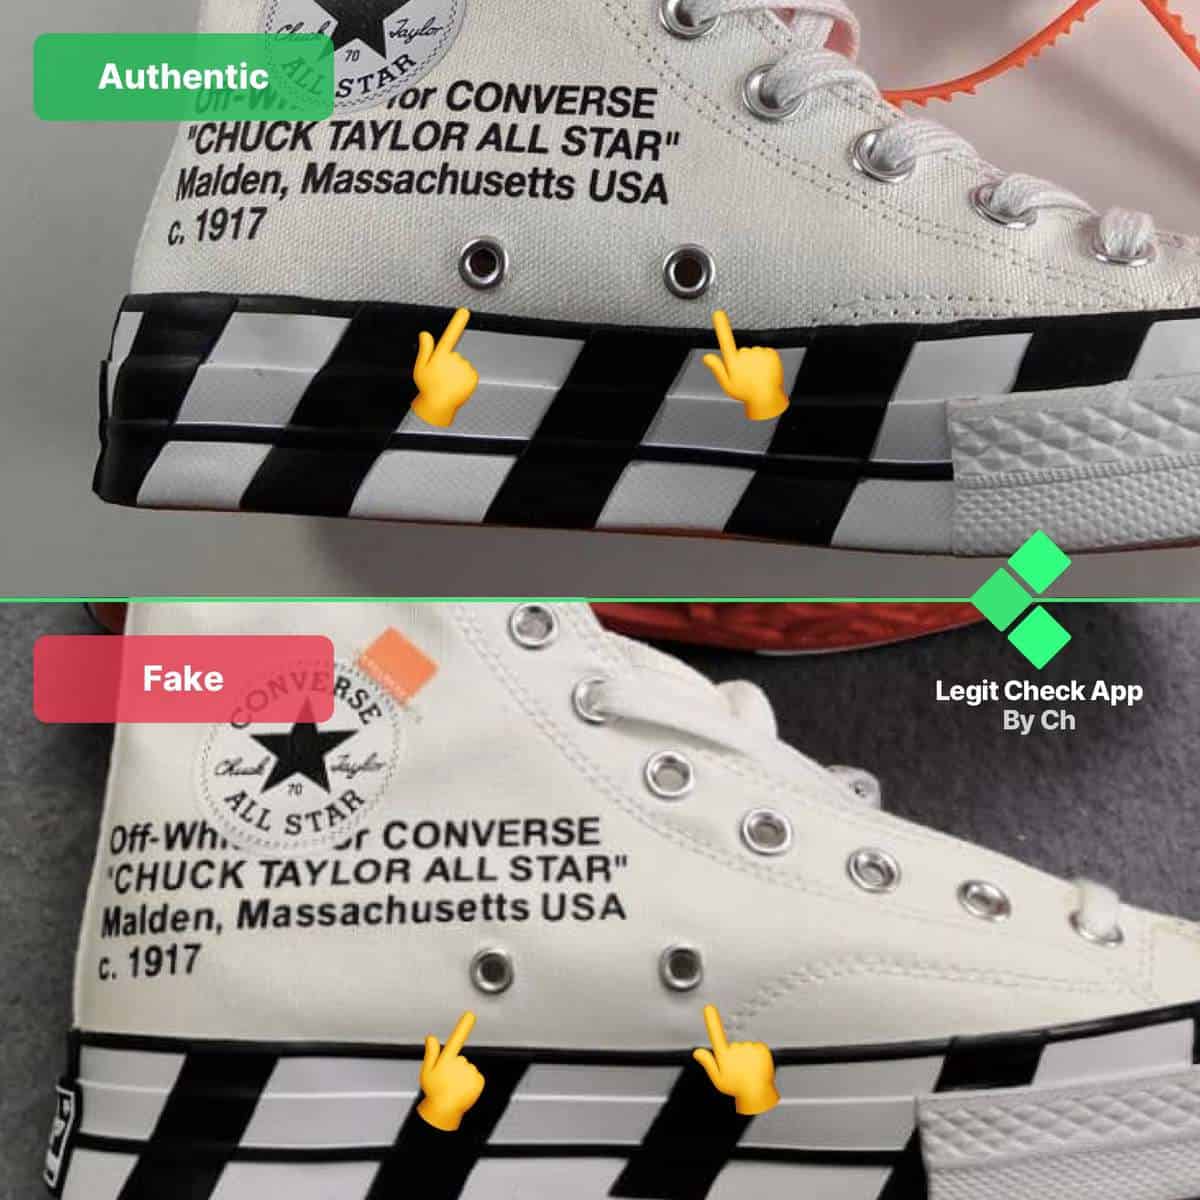 Off-White Converse 2.0 Fake Vs Real 